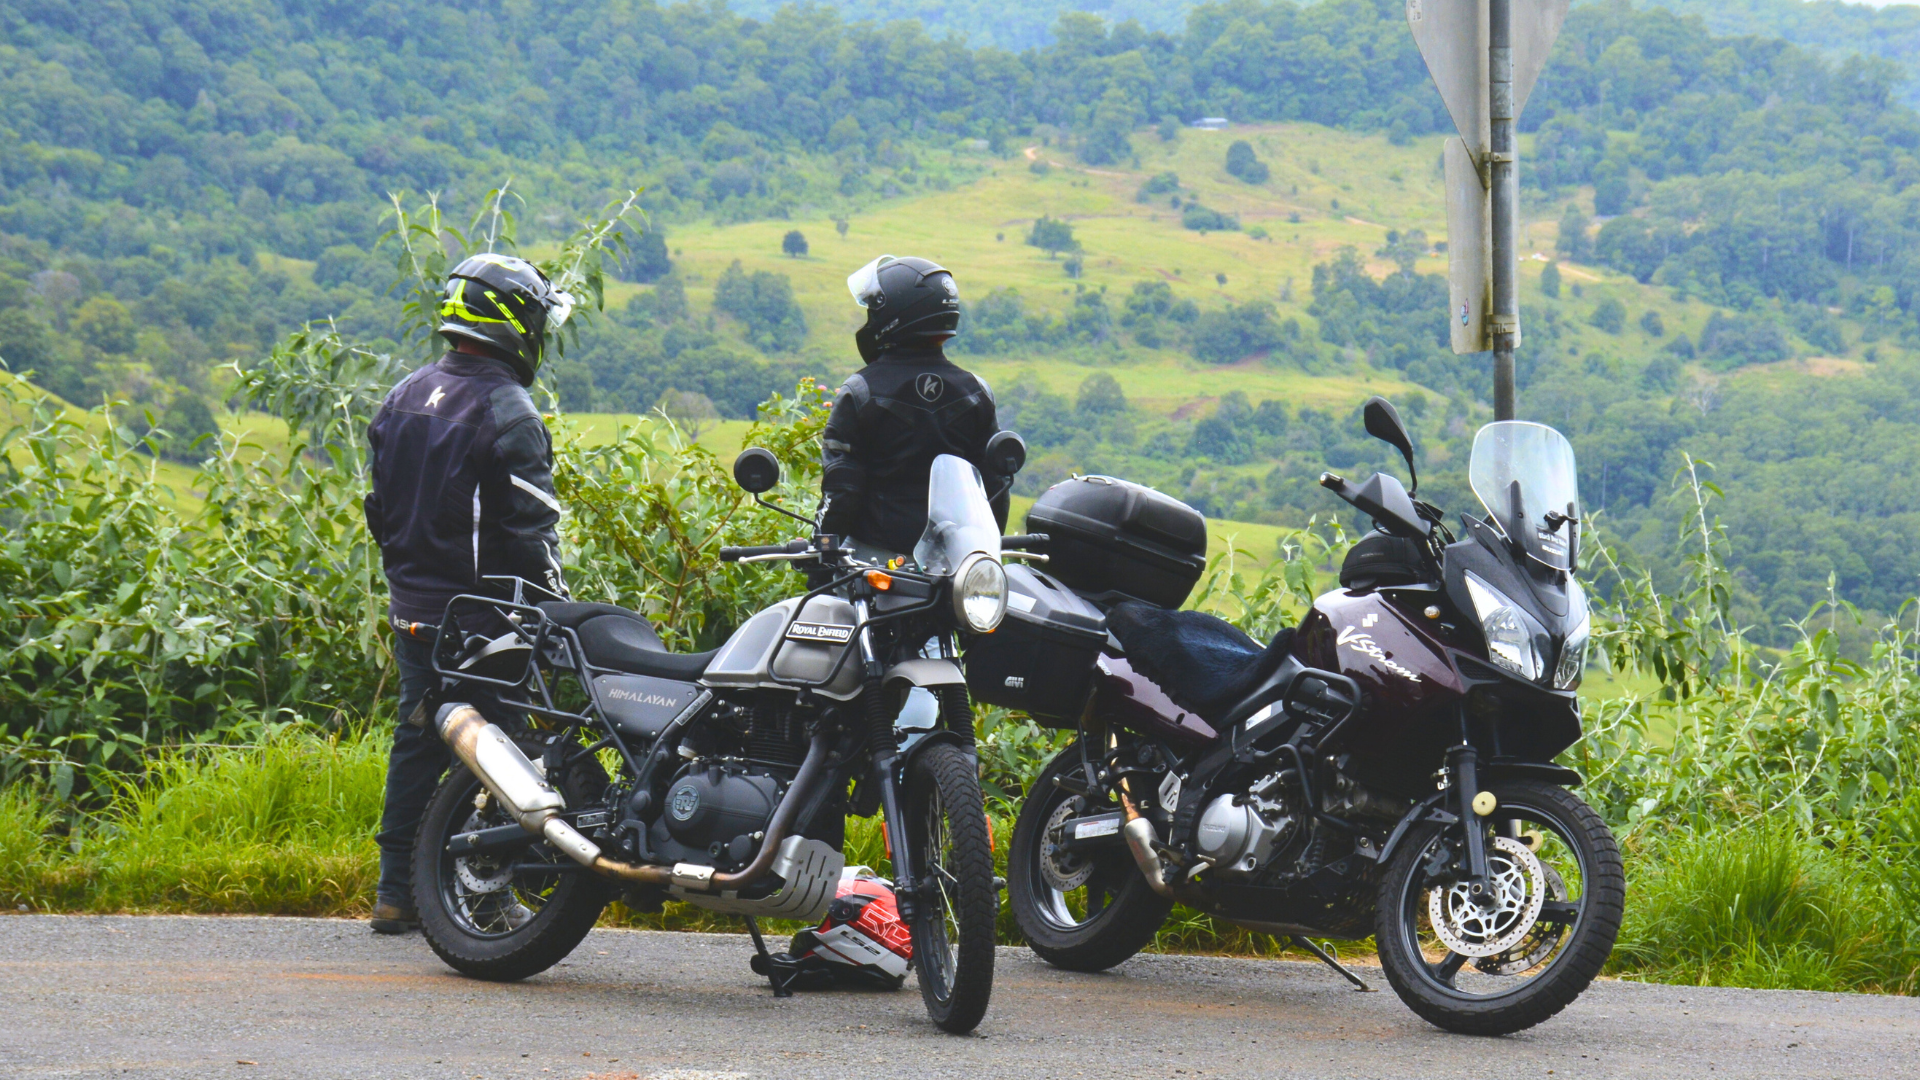 Motorcycle Tour of Numinbah Valley & Natural Bridge